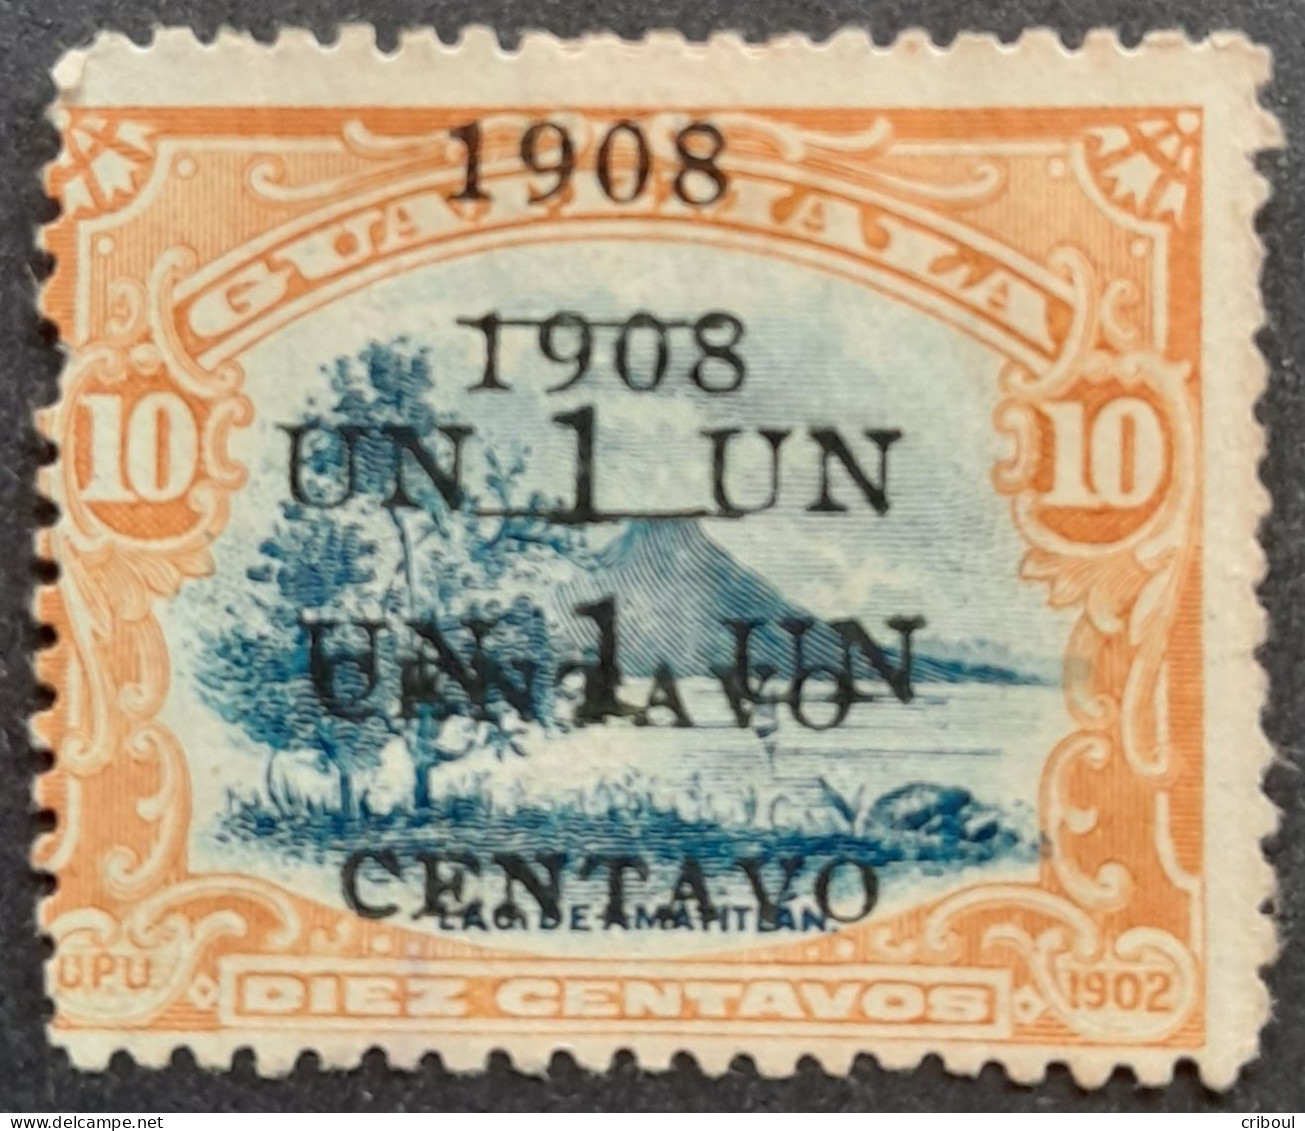 Guatemala 1908 Lac Lake Amatitlan Double Surcharge Overprint UN CENTAVO Yvert 138a (*) MNG - Erreurs Sur Timbres